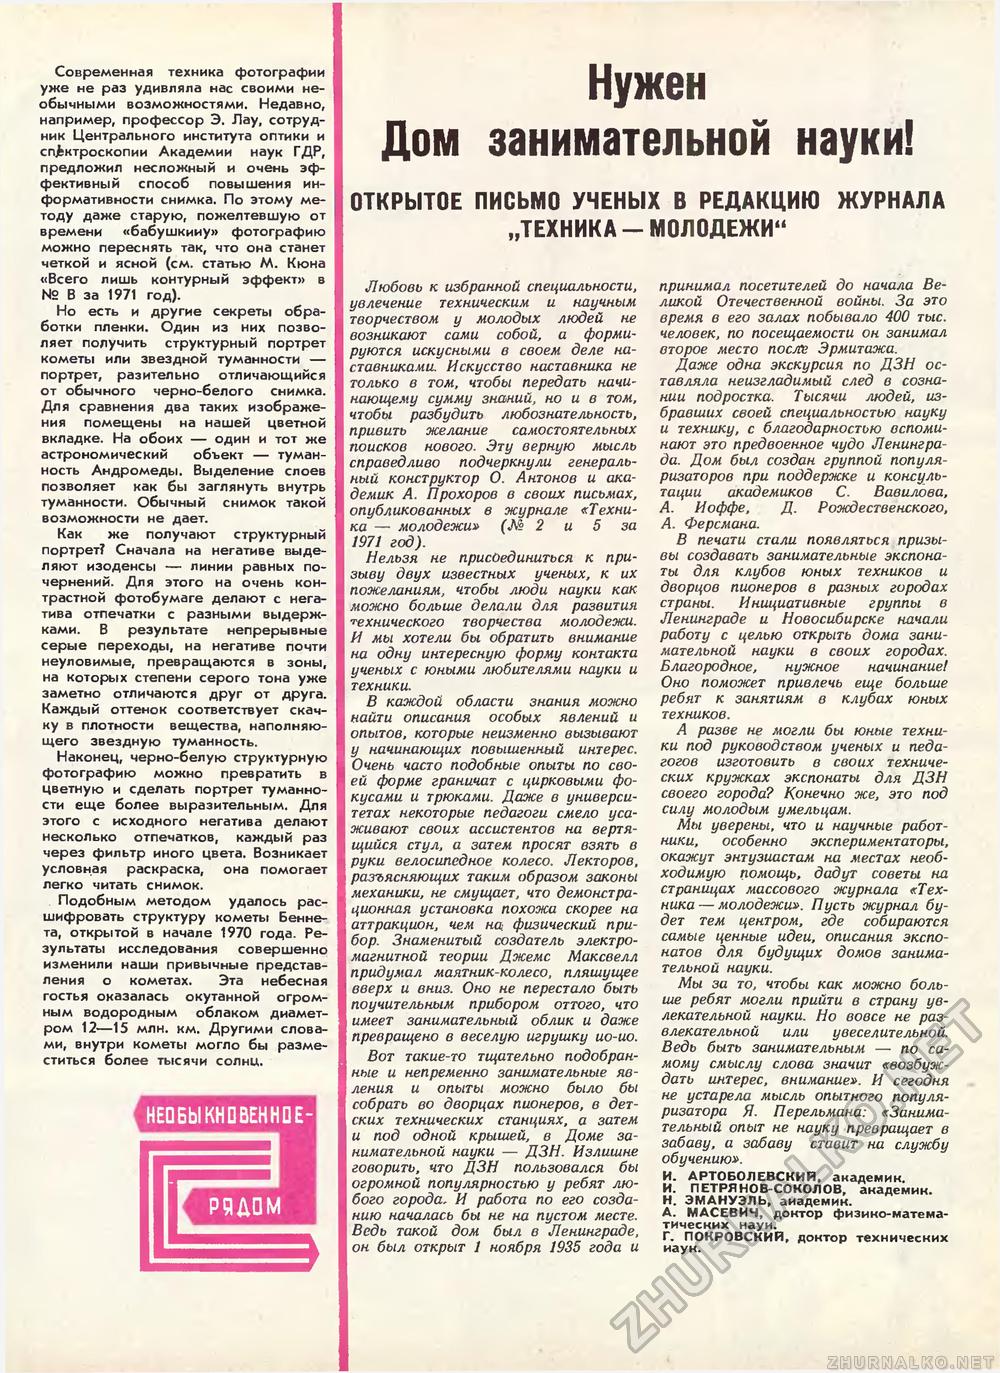 Техника - молодёжи 1972-06, страница 34